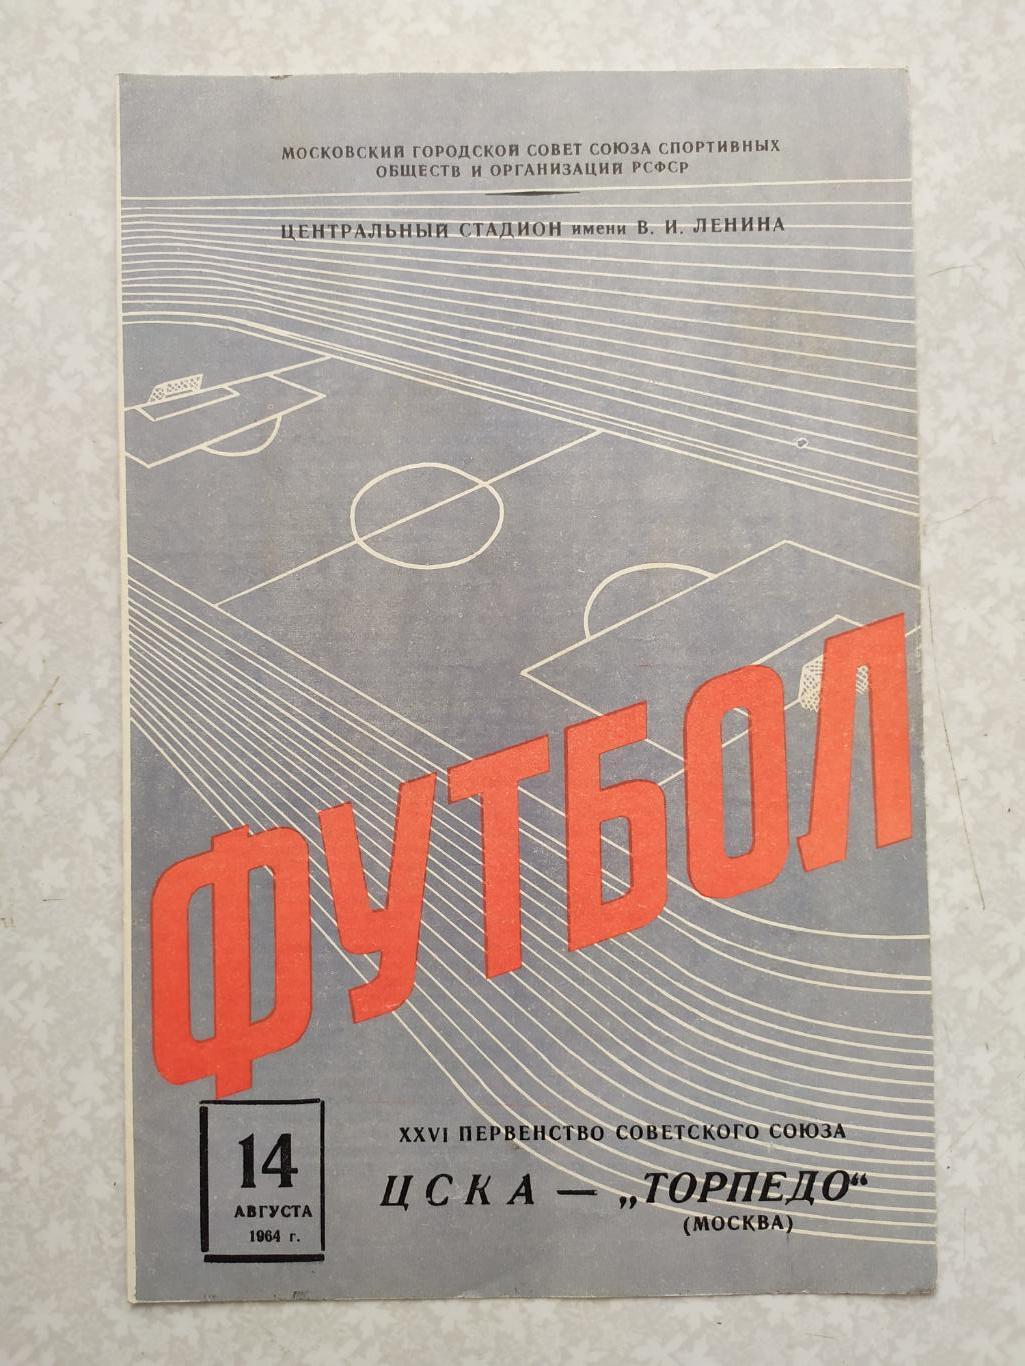 ЦСКА-Торпедо Москва 14.08.1964